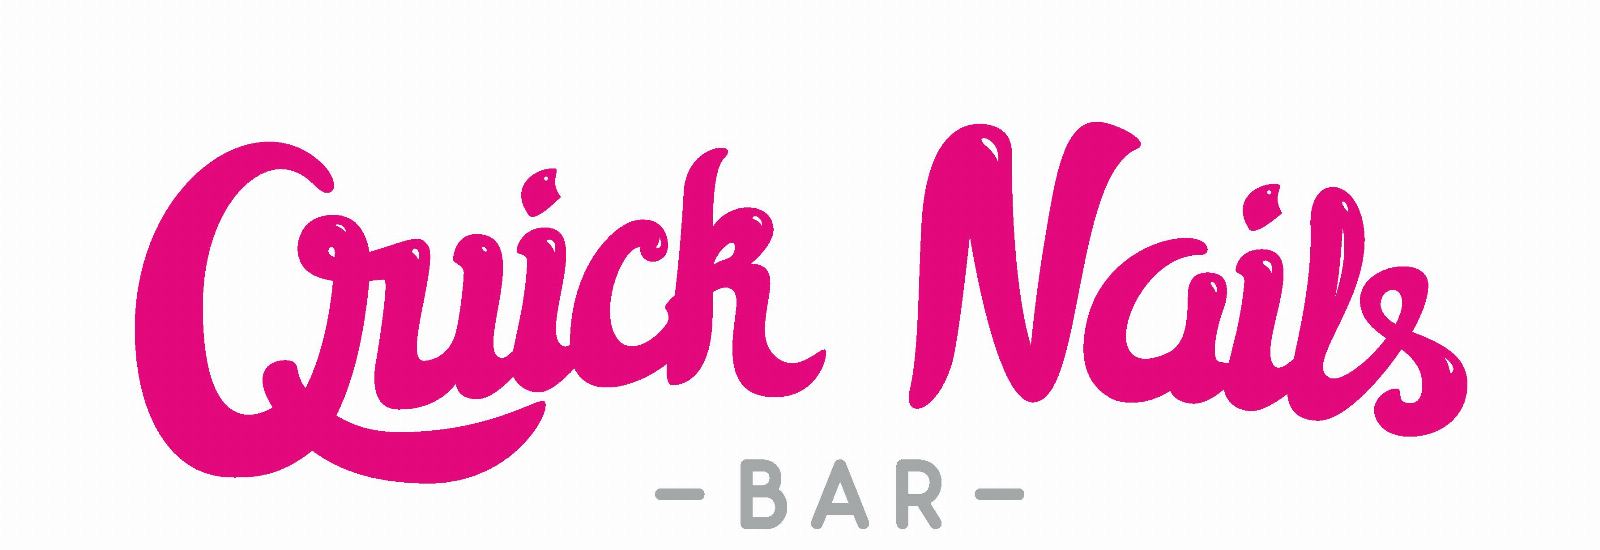 Quick Nails Bar- Wyspa, Katowice, logo-a4-quicknails-page-001